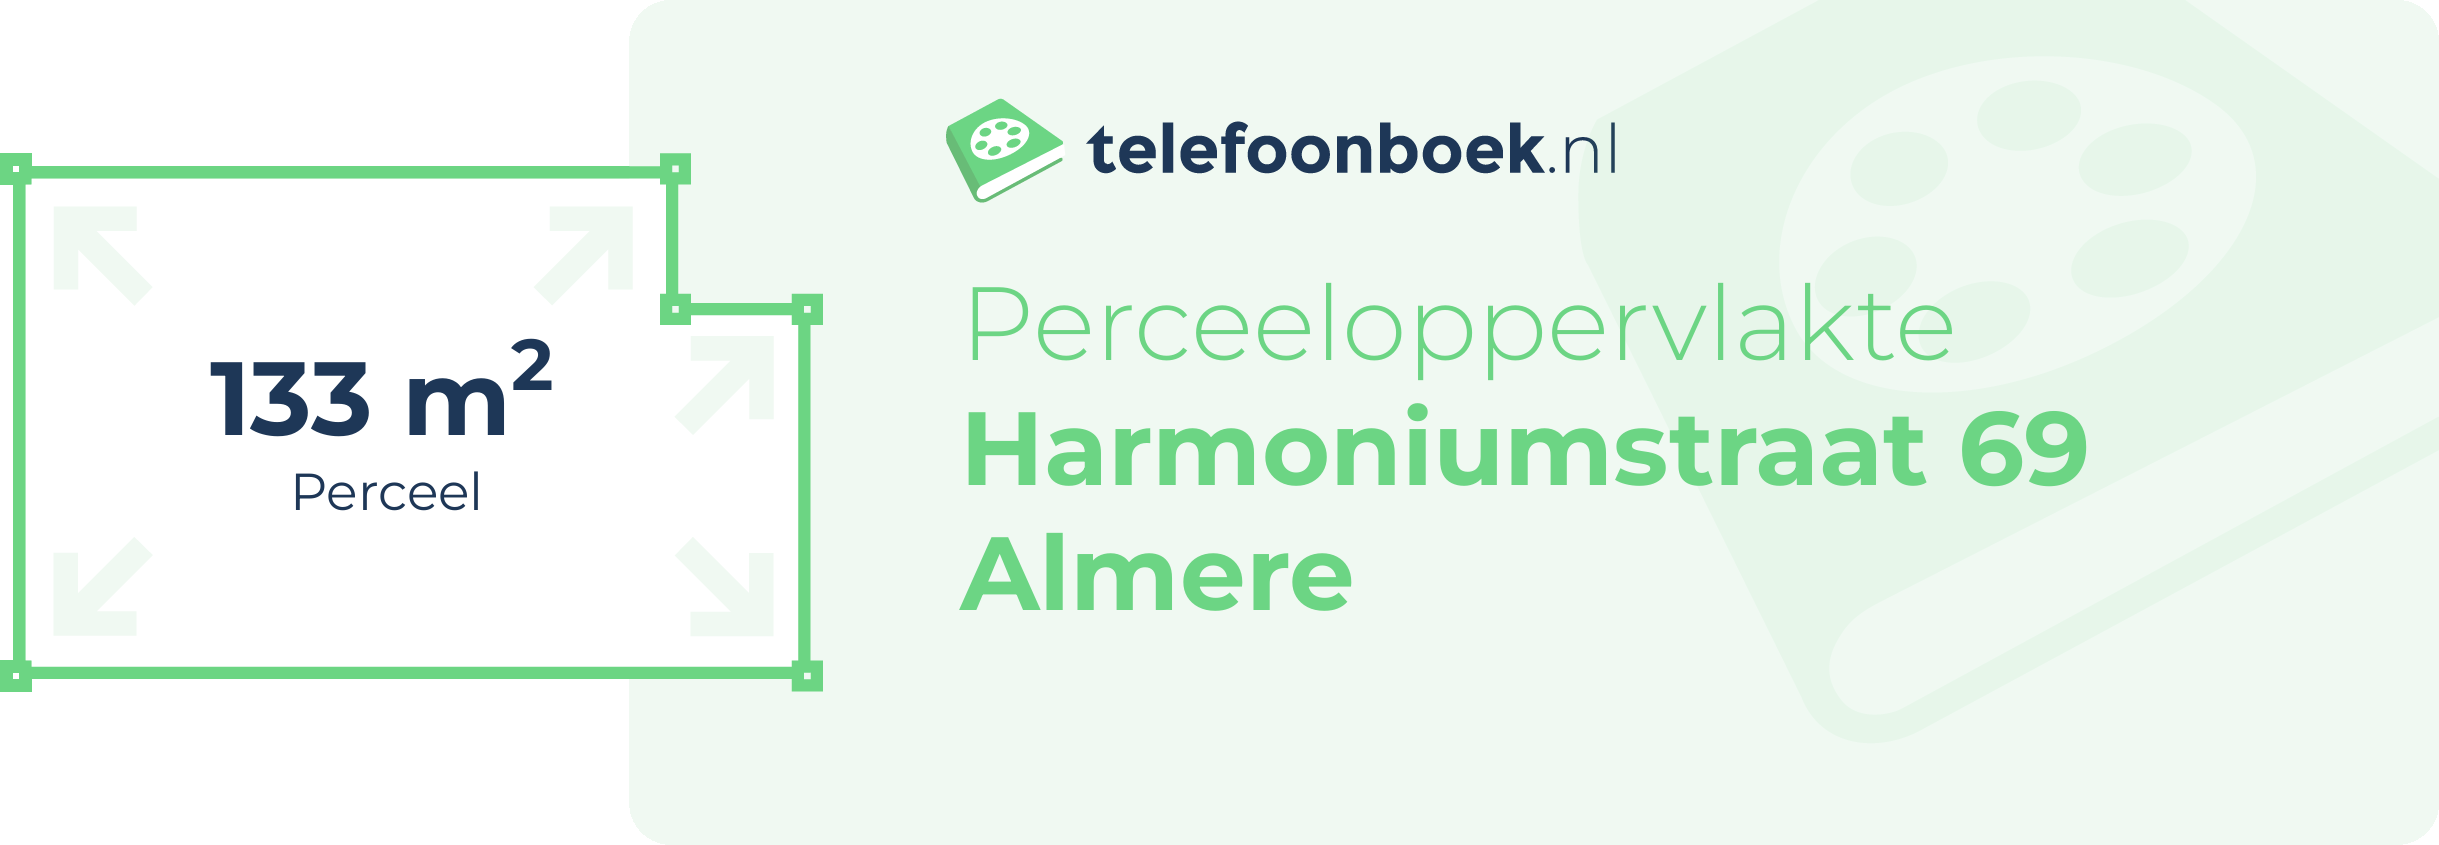 Perceeloppervlakte Harmoniumstraat 69 Almere